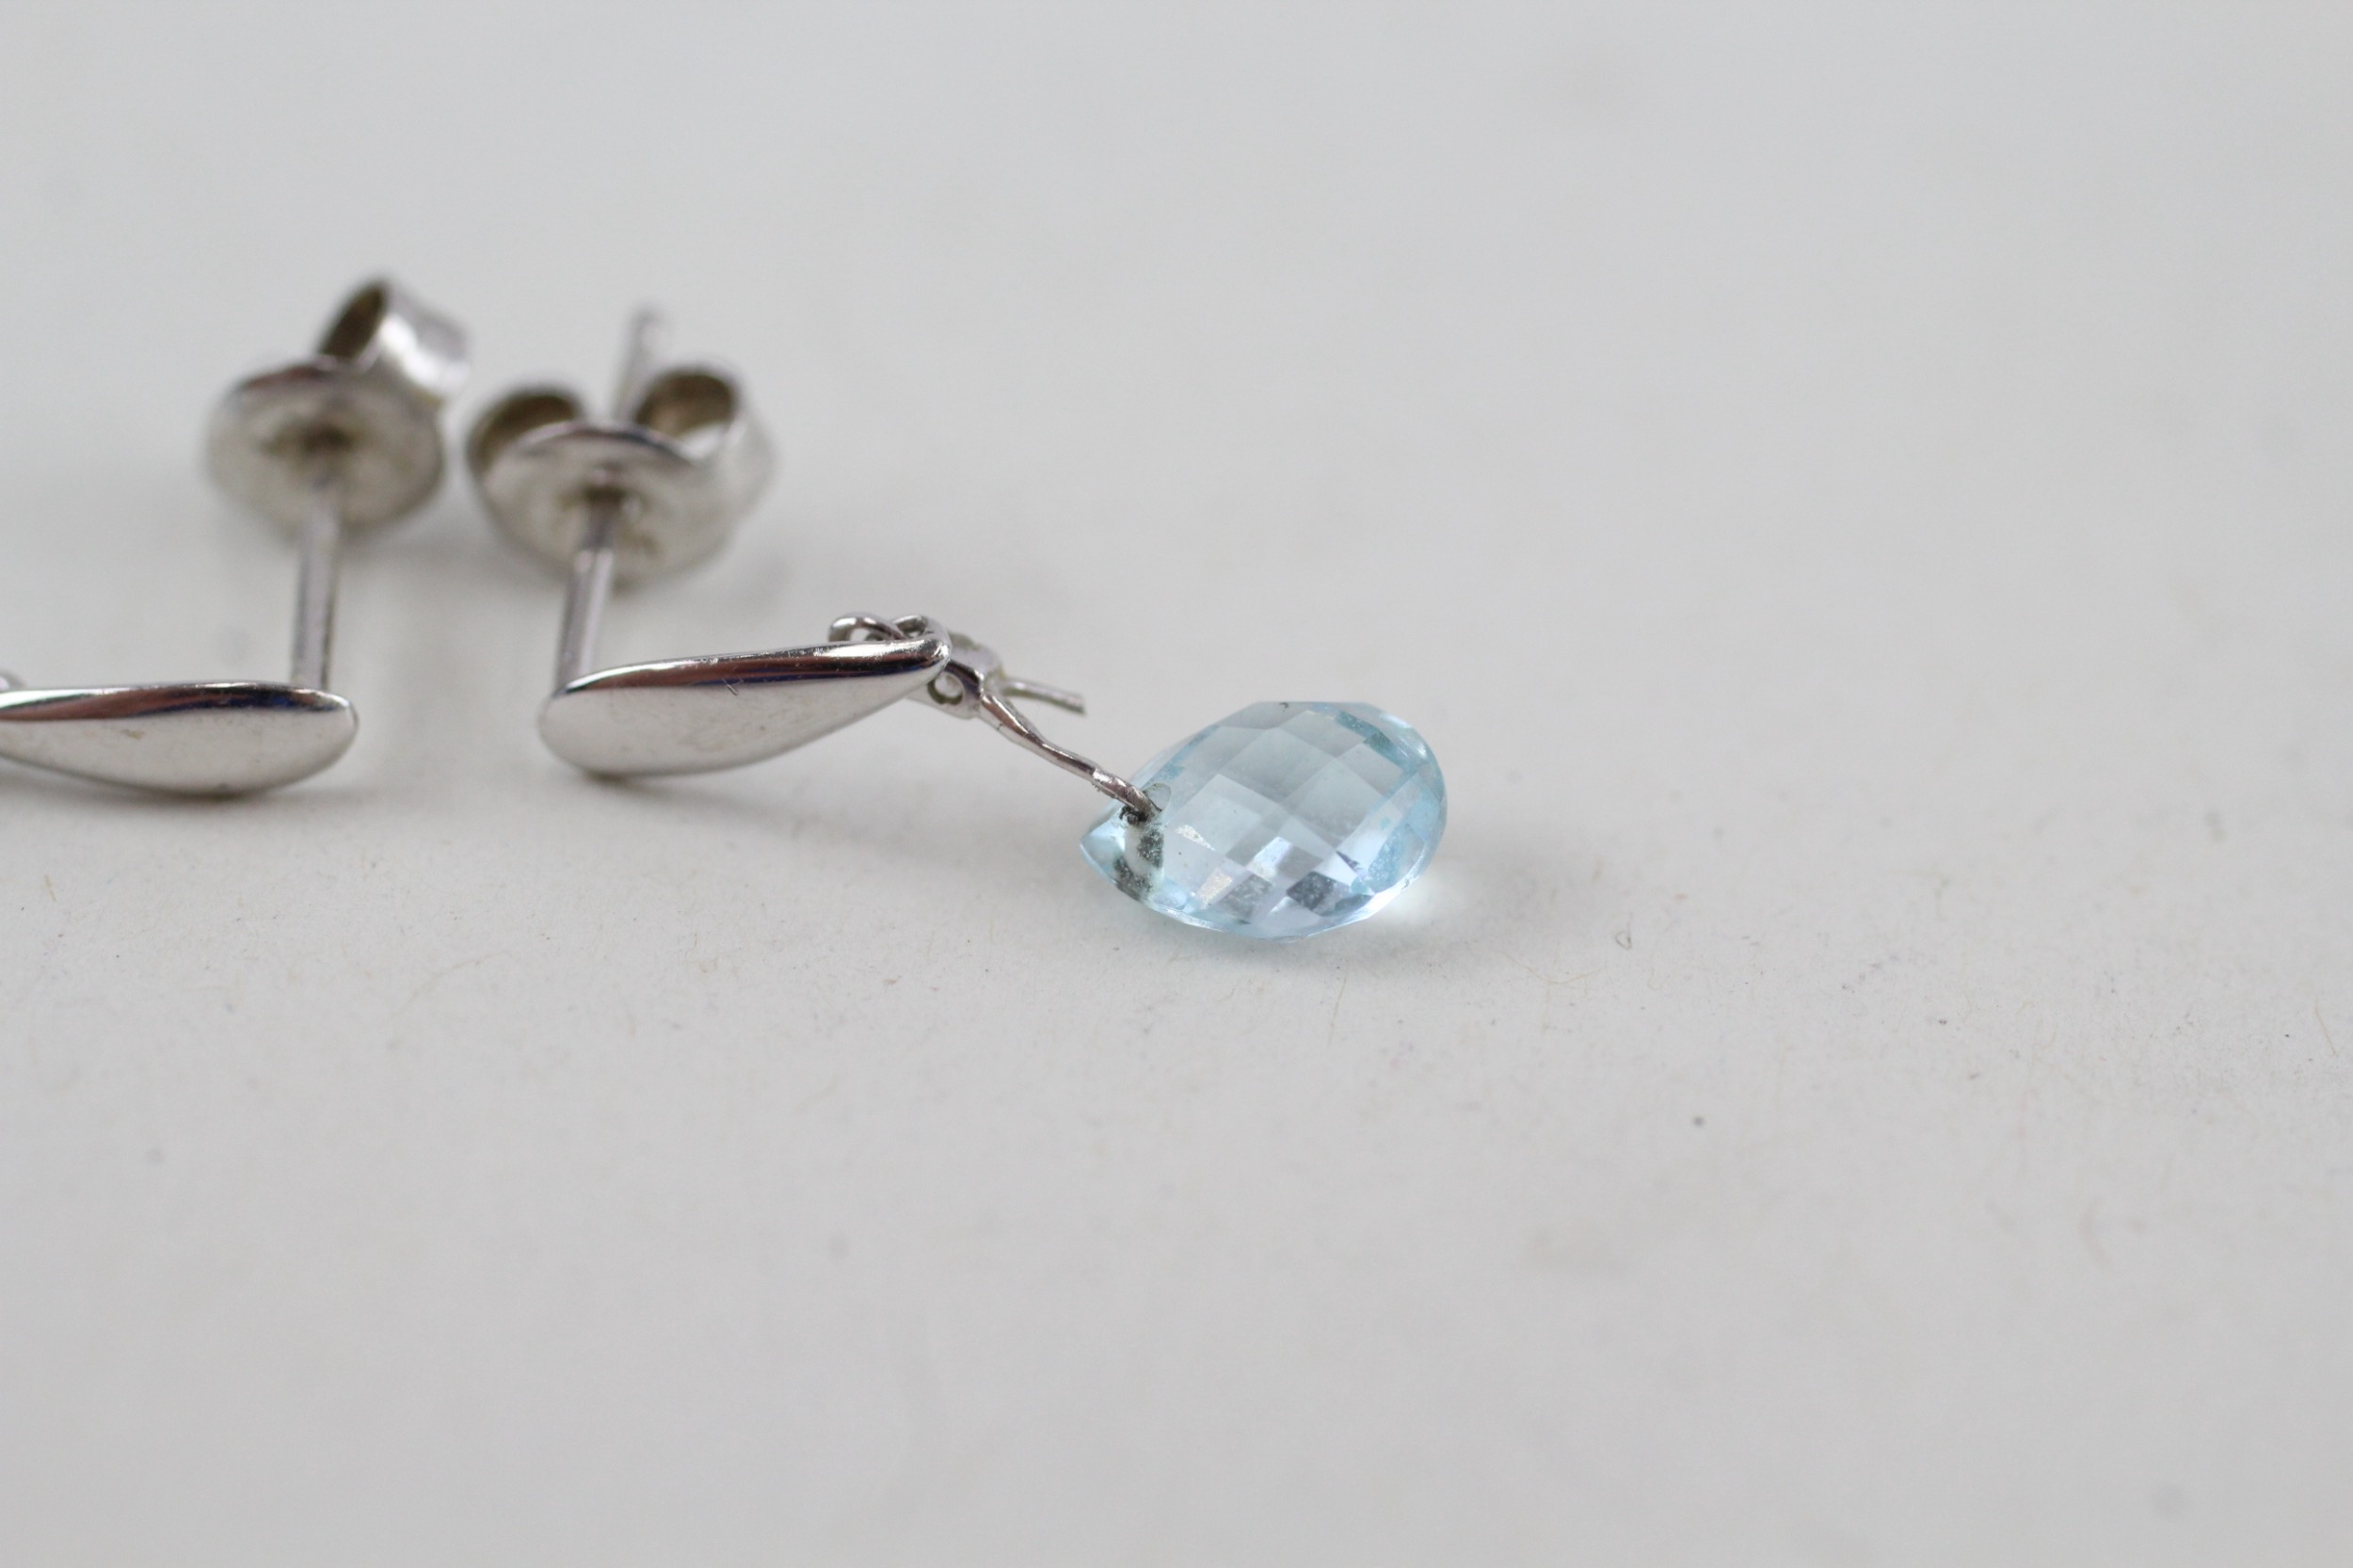 9ct gold blue gemstone drop earrings (1.1g) - Image 3 of 4